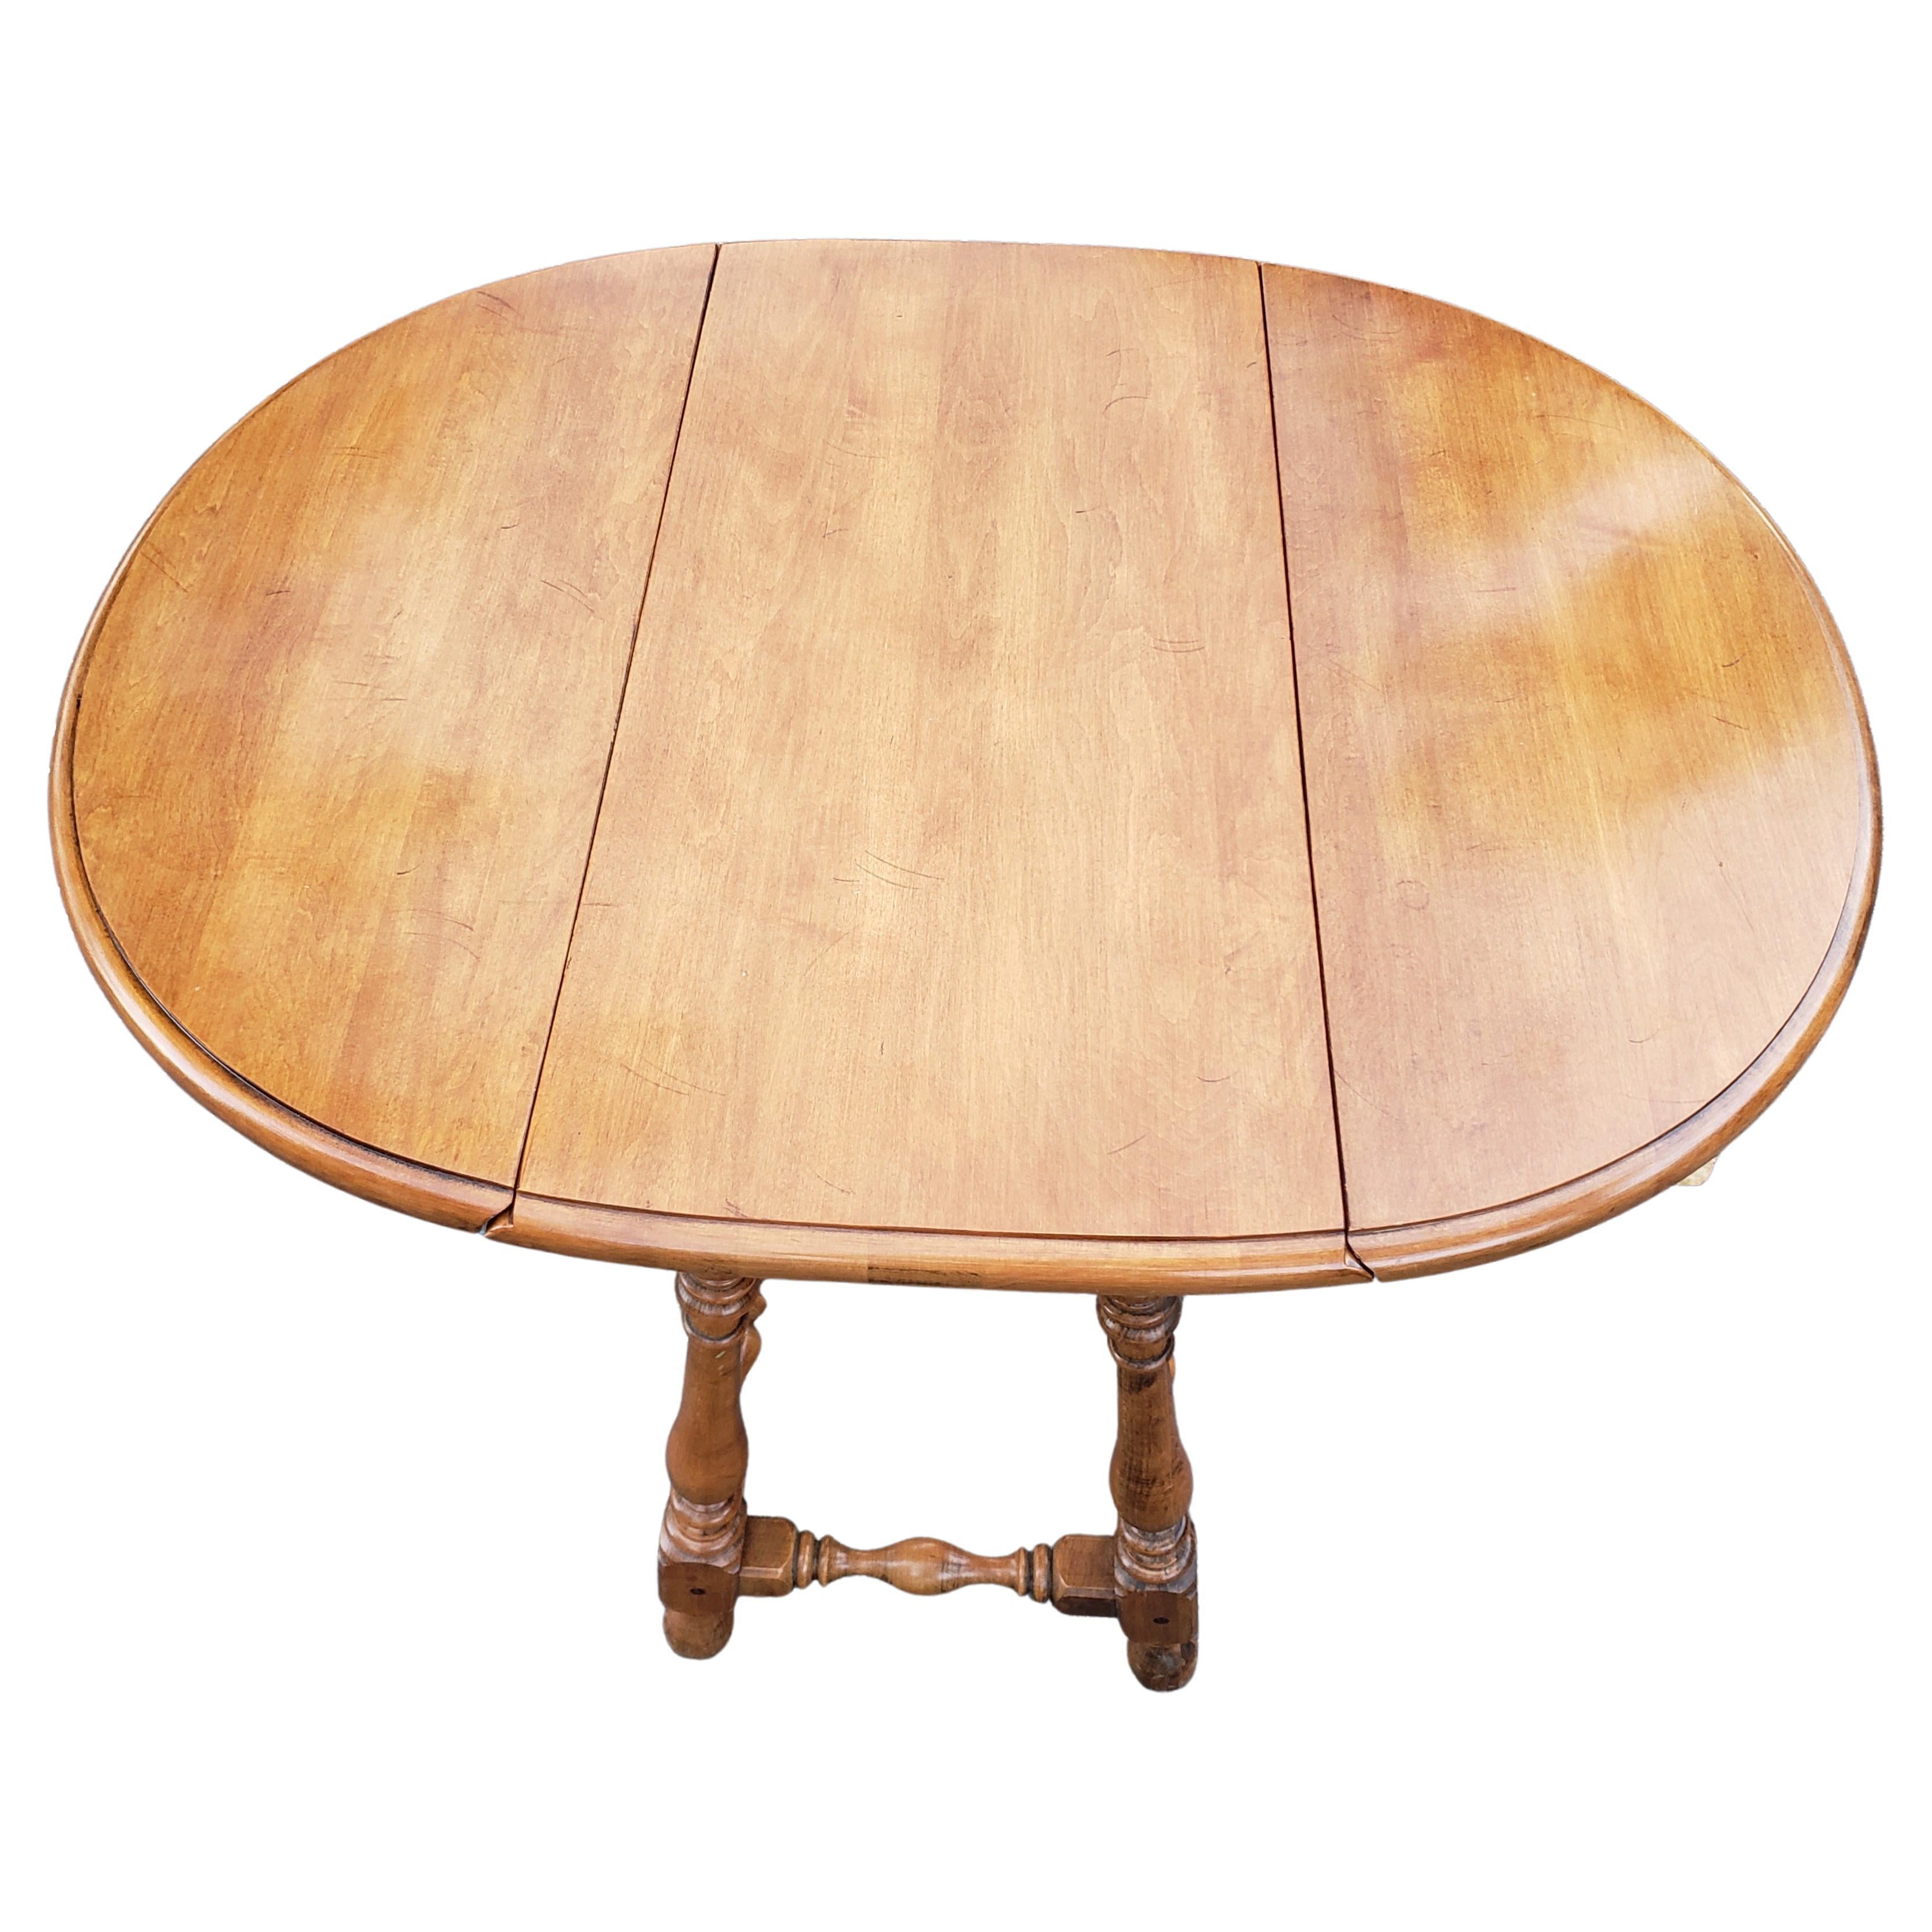 Ein gekonnt gearbeiteter Mid-Century American Classical Maple Drop Leaf Side Table in tollem Vintage-Zustand. Maße 34